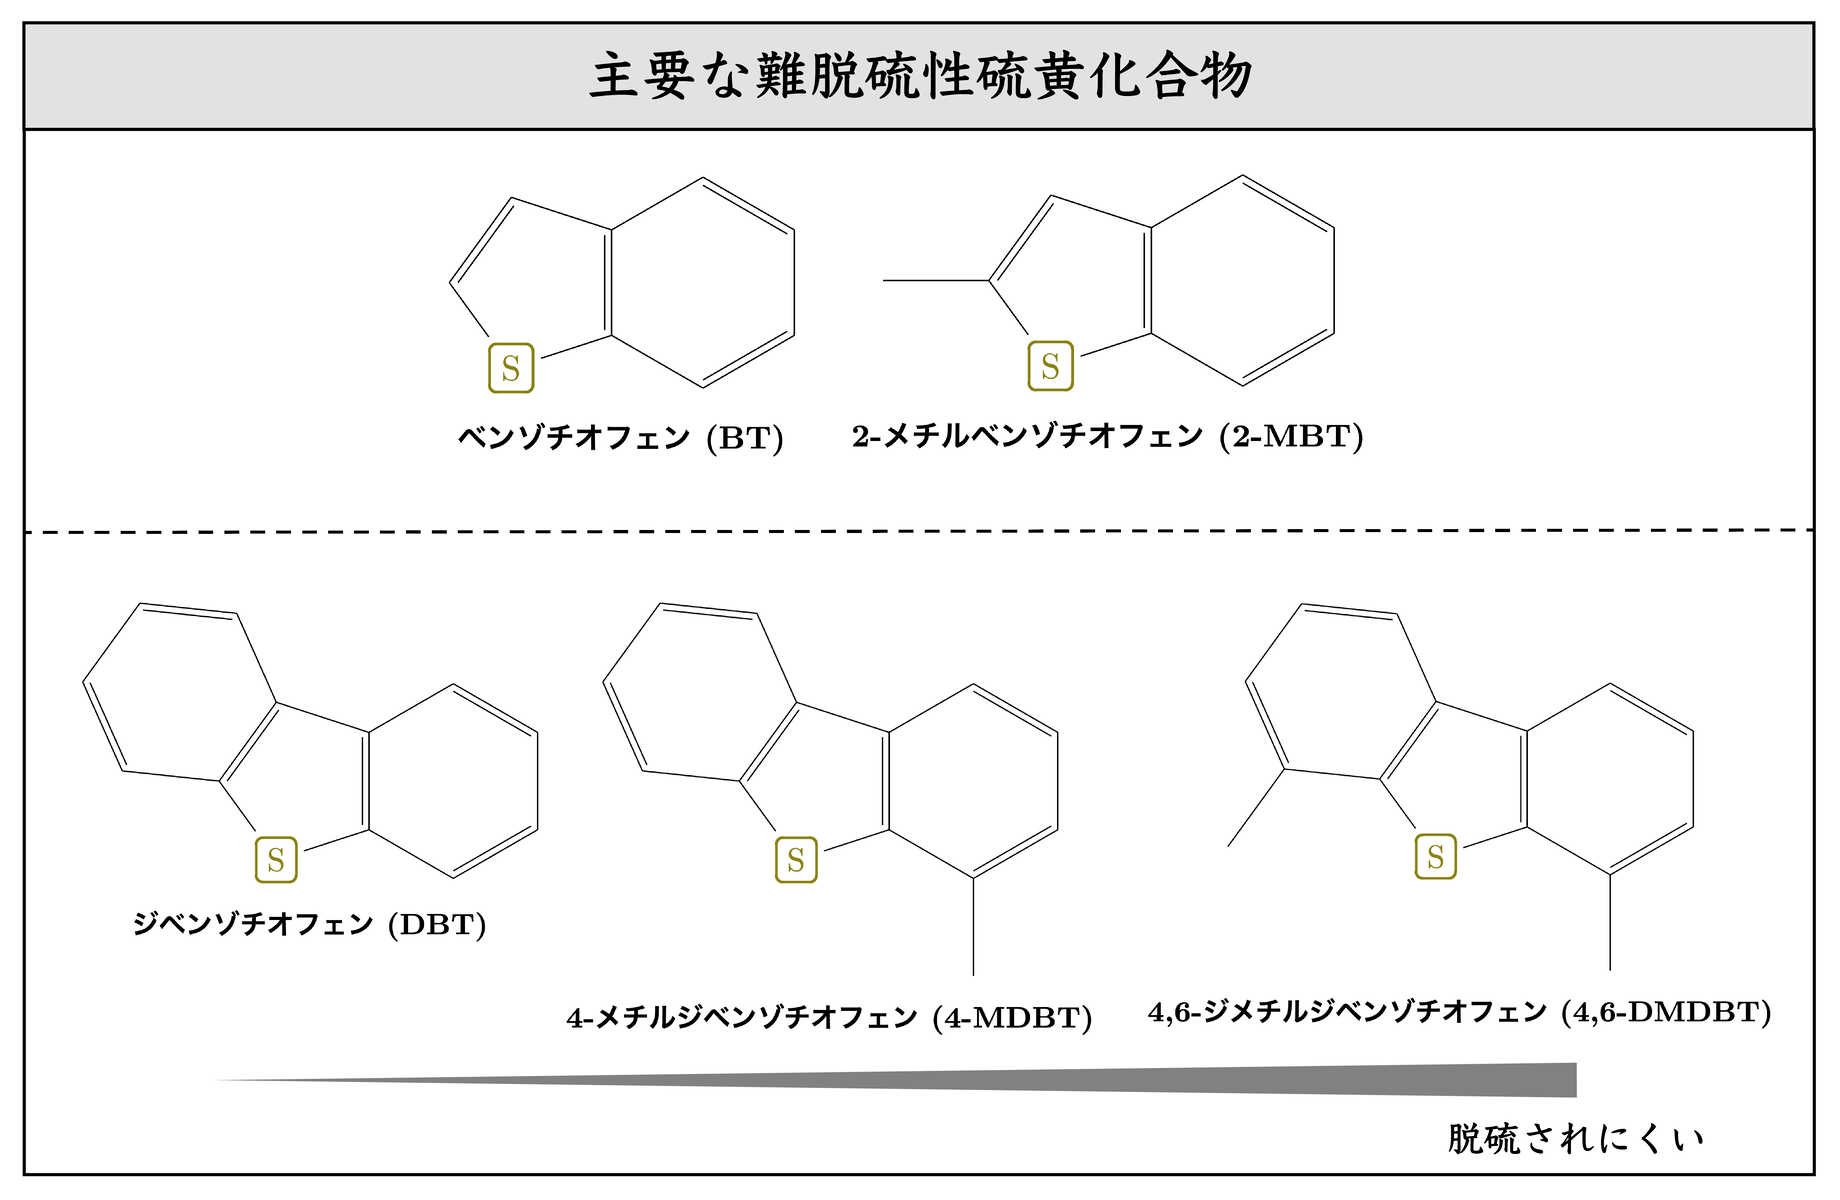 <dfn class="fig">図3</dfn>：<span class="qrinews-figure-title">主要な難脱硫性硫黄化合物</span>　下段のジベンゾチオフェン (DBT) 類の中では、DBT < 4-MDBT < 4,6-DMDBT の順番で脱硫が難しくなる。